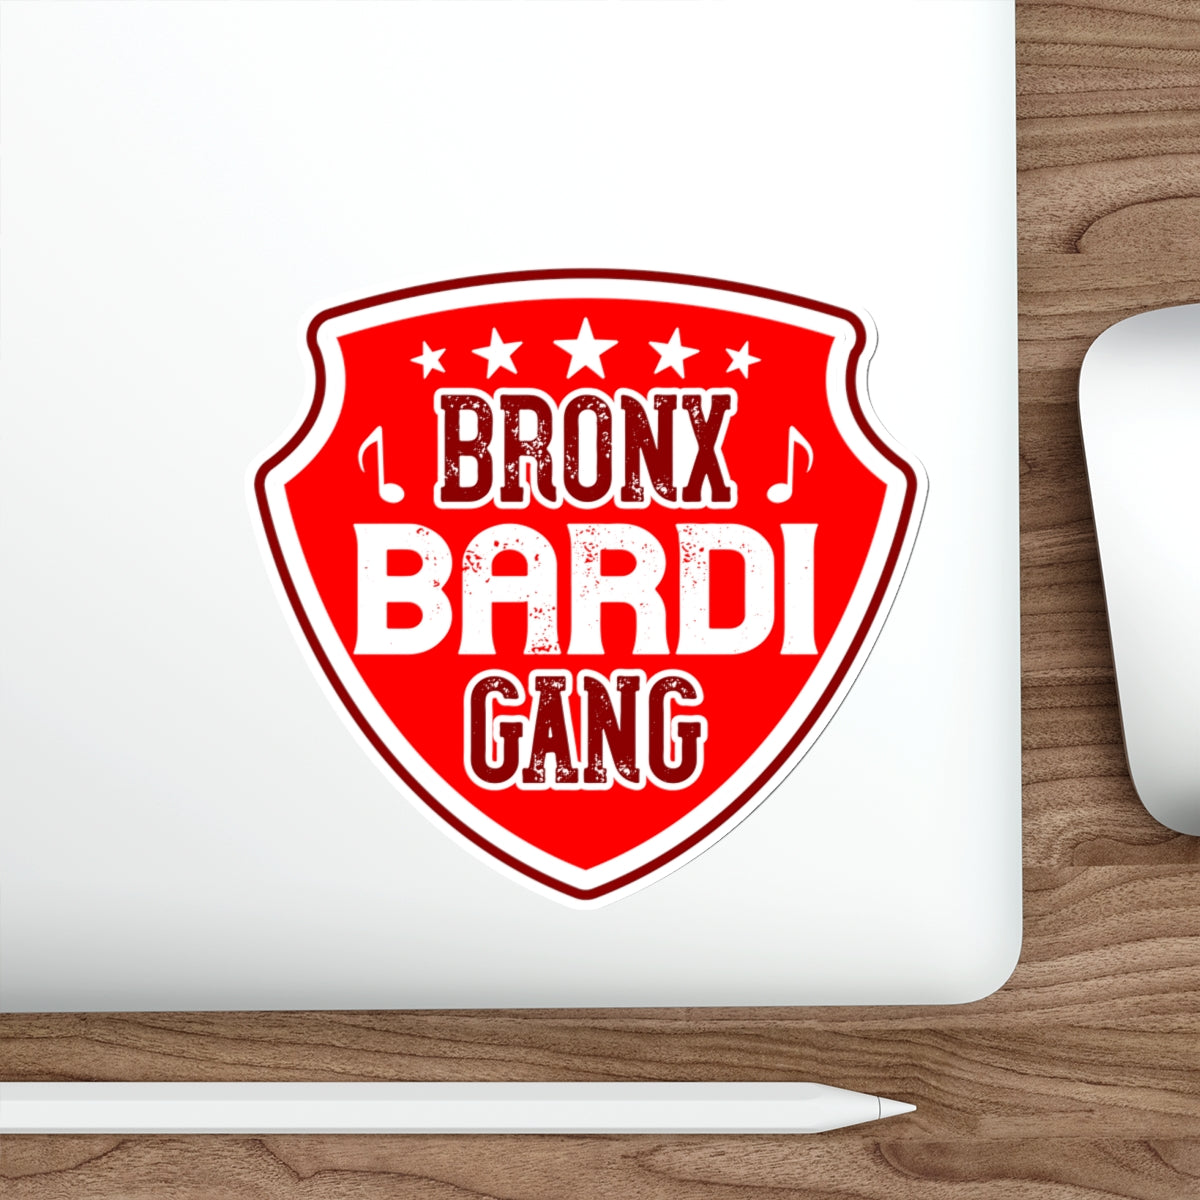 Bronx Bardi Gang Sticker